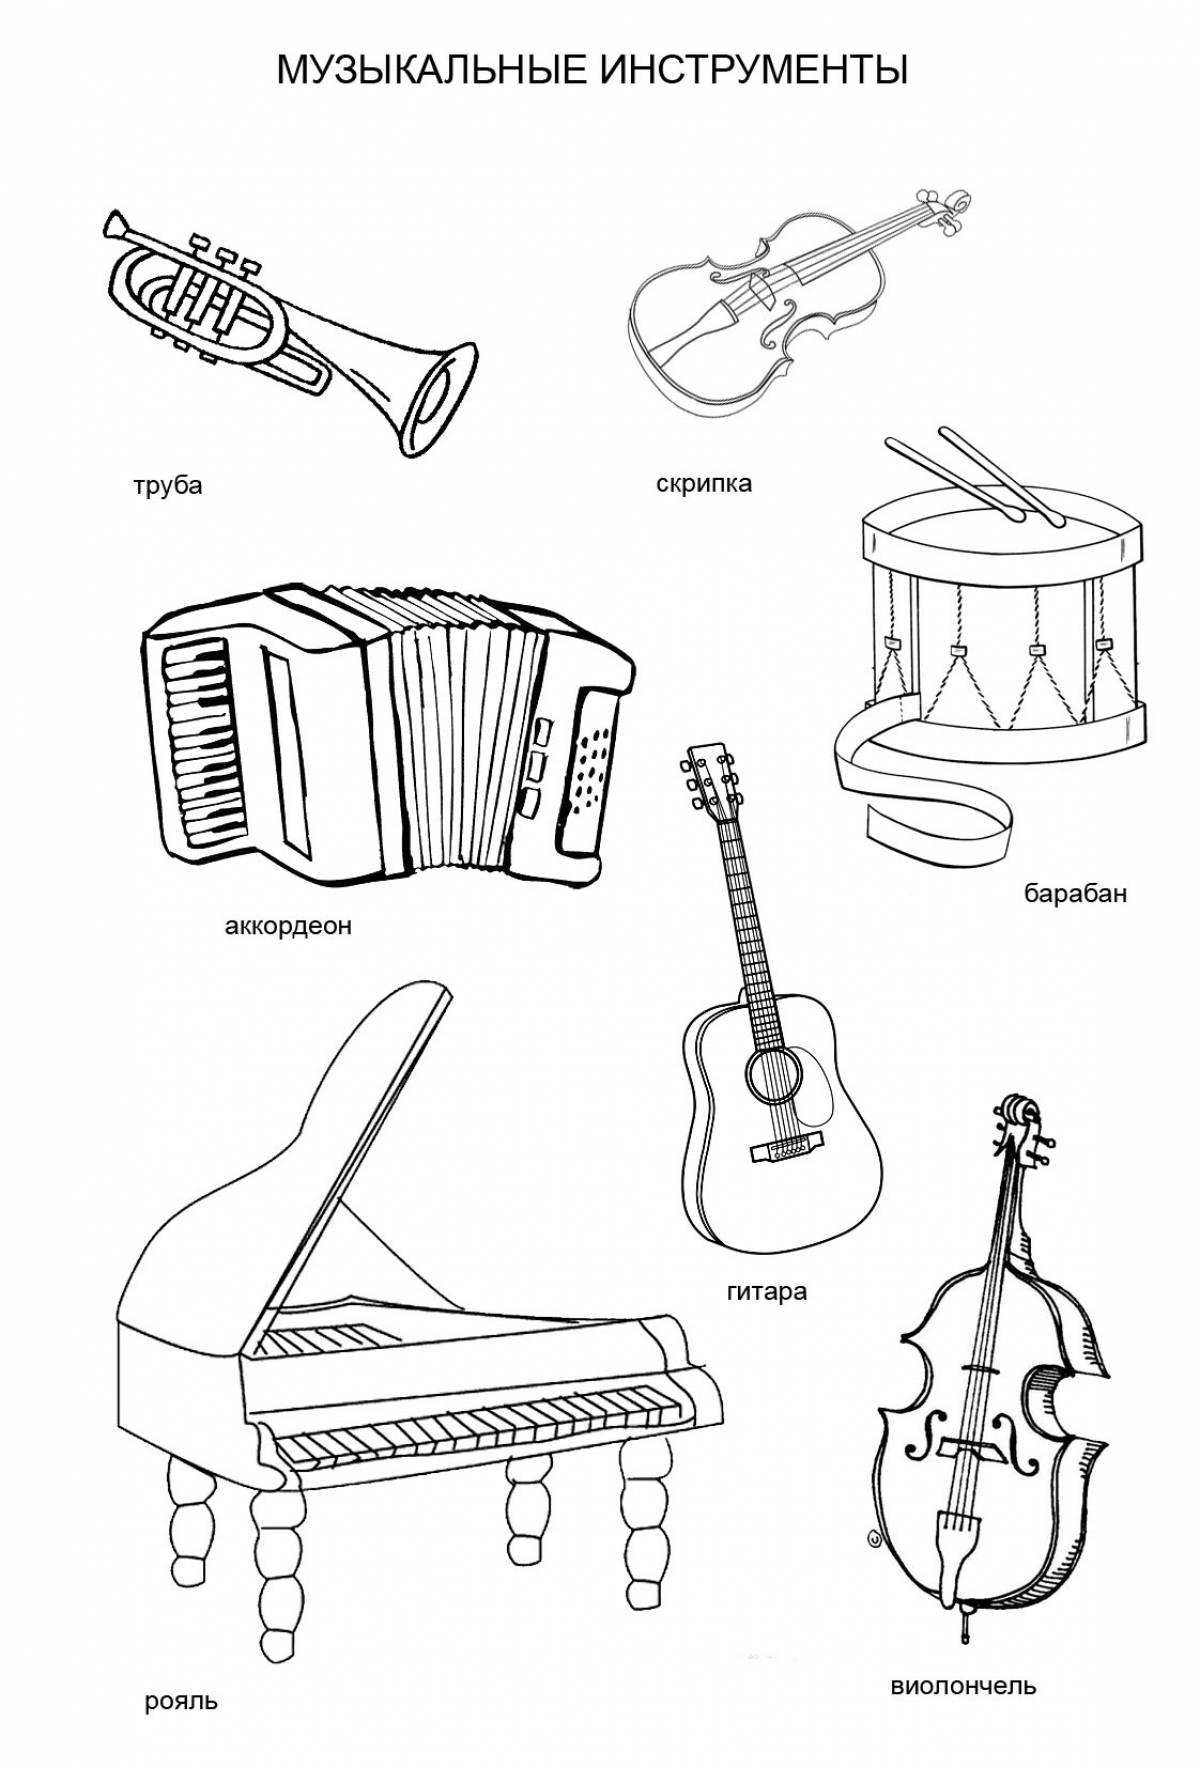 Musical instruments for children